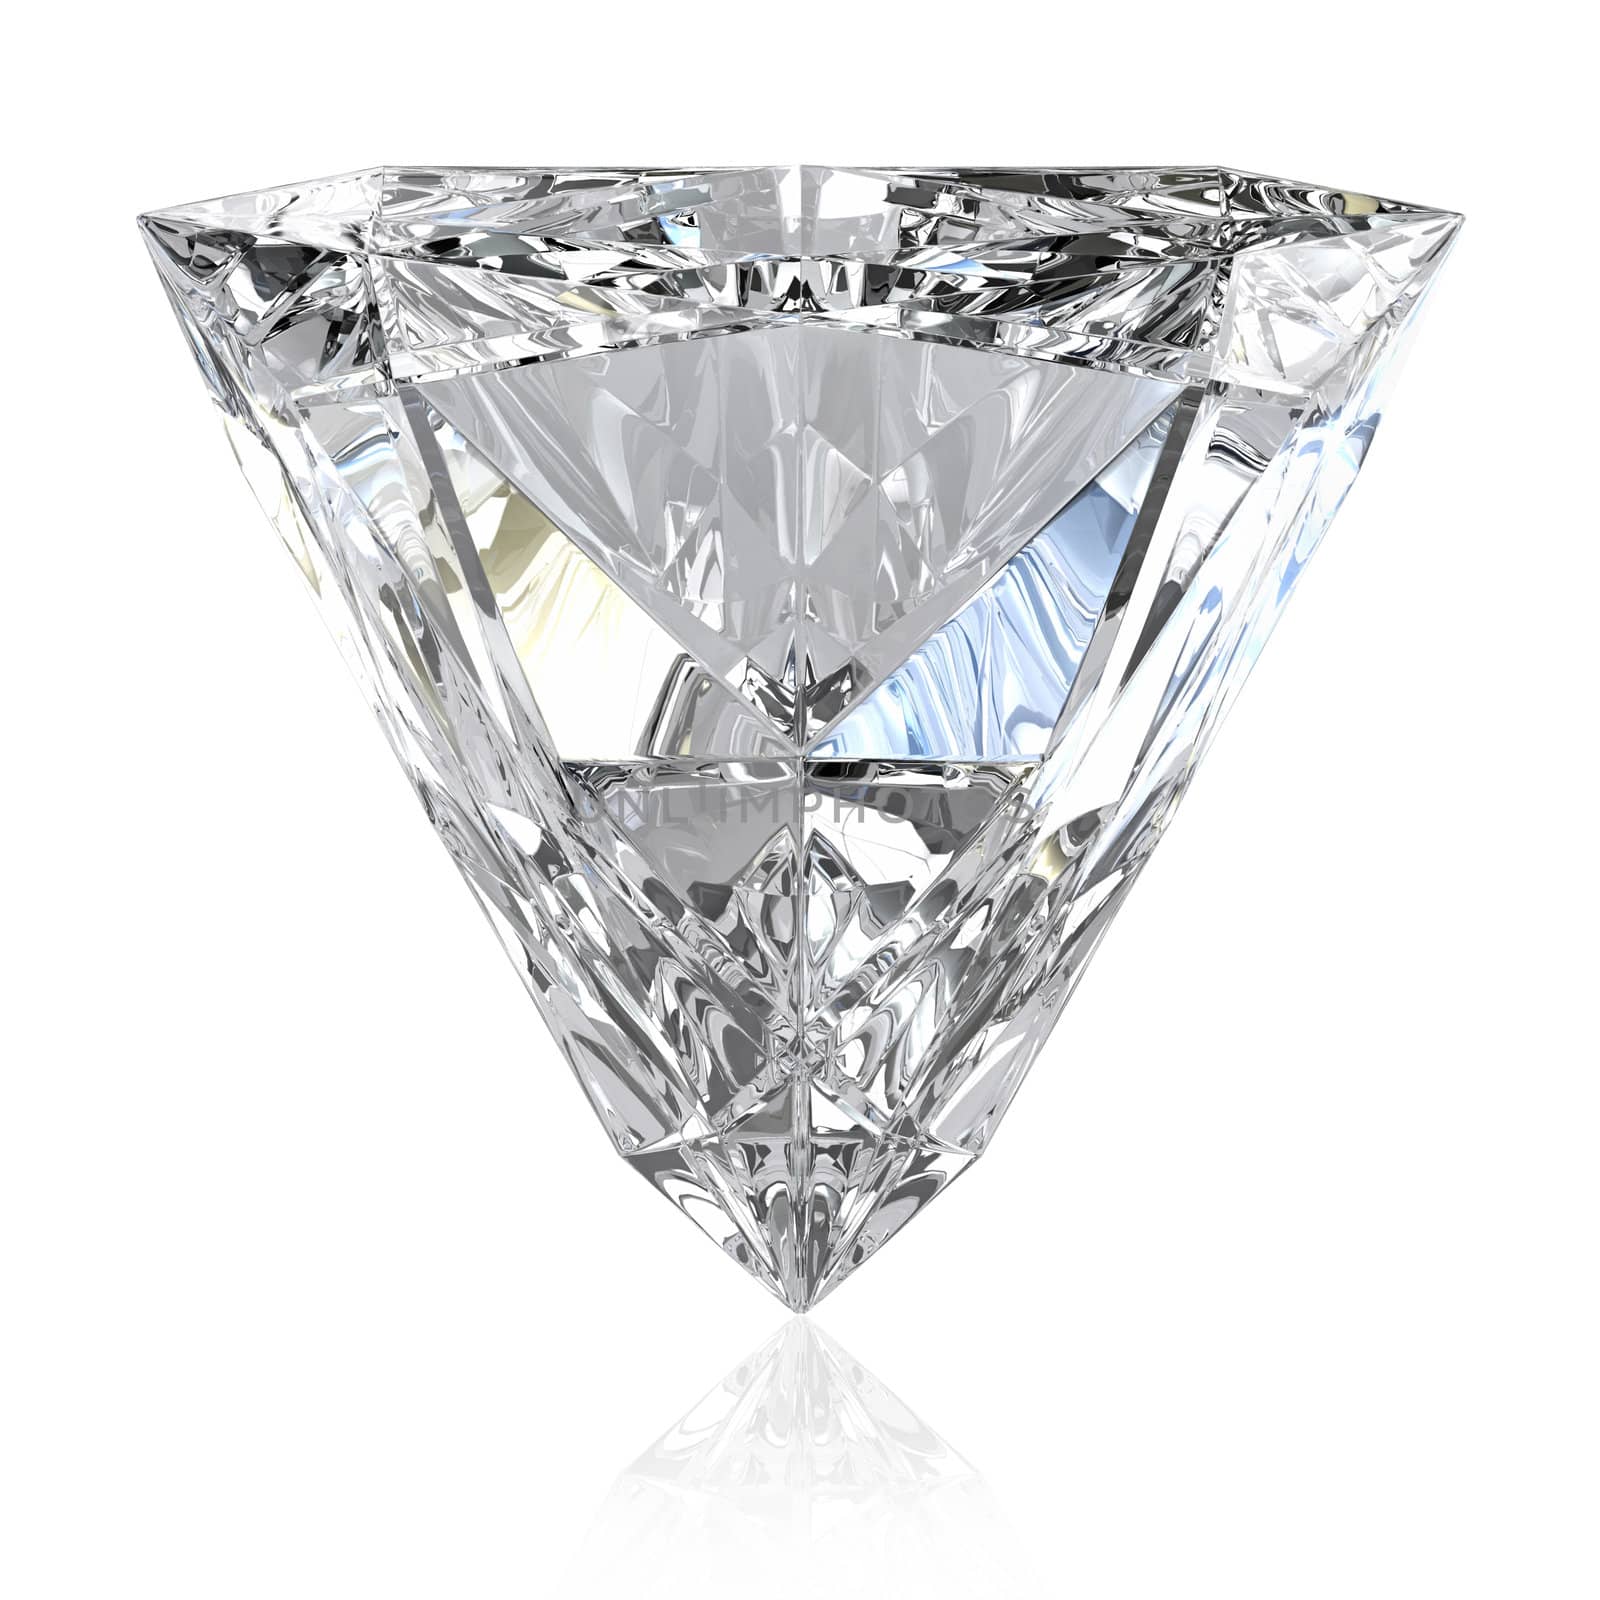 Trilliant cut diamond by Zelfit